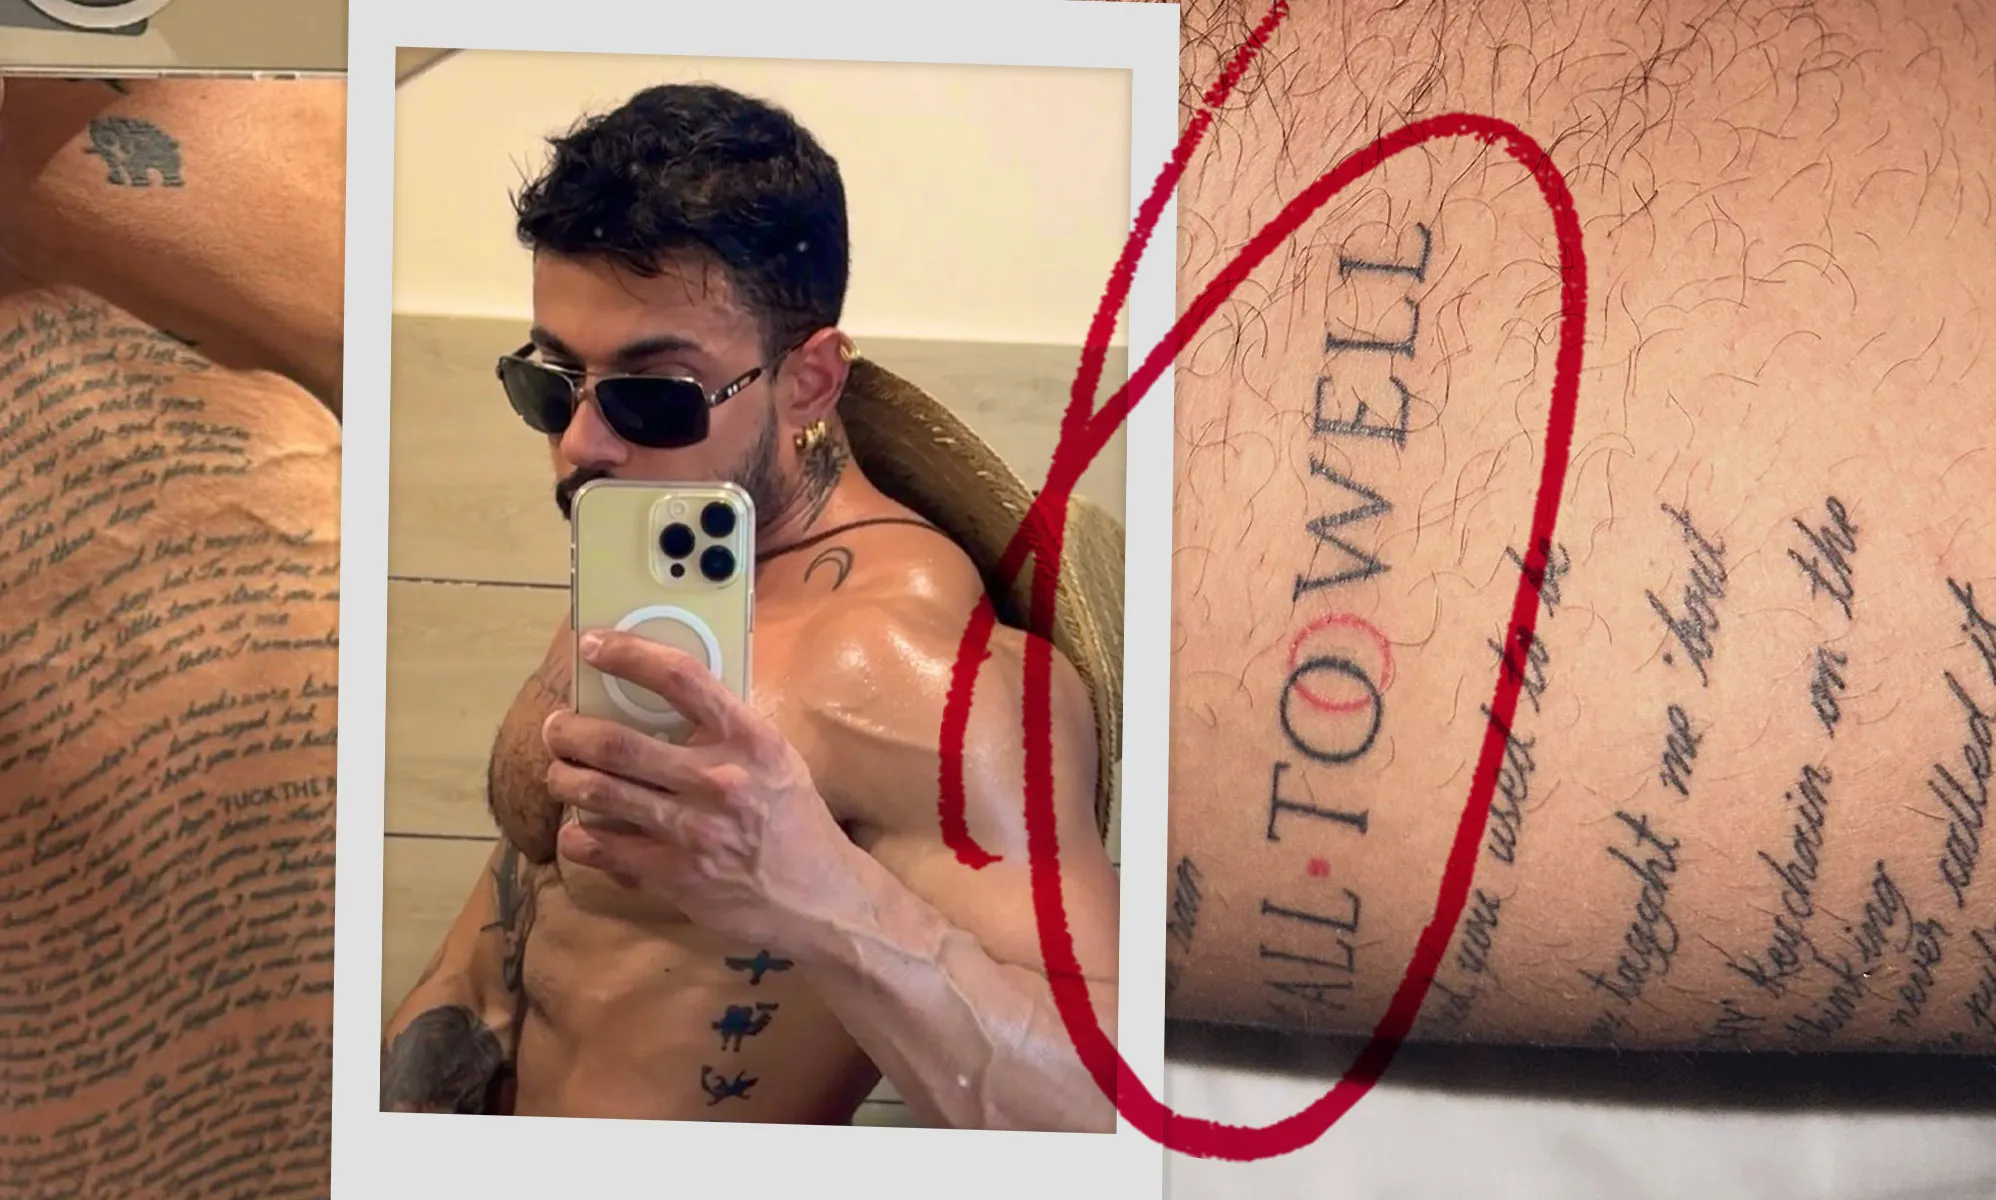 Gay man's tattoo of Taylor Swift's All Too Well lyrics divides internet